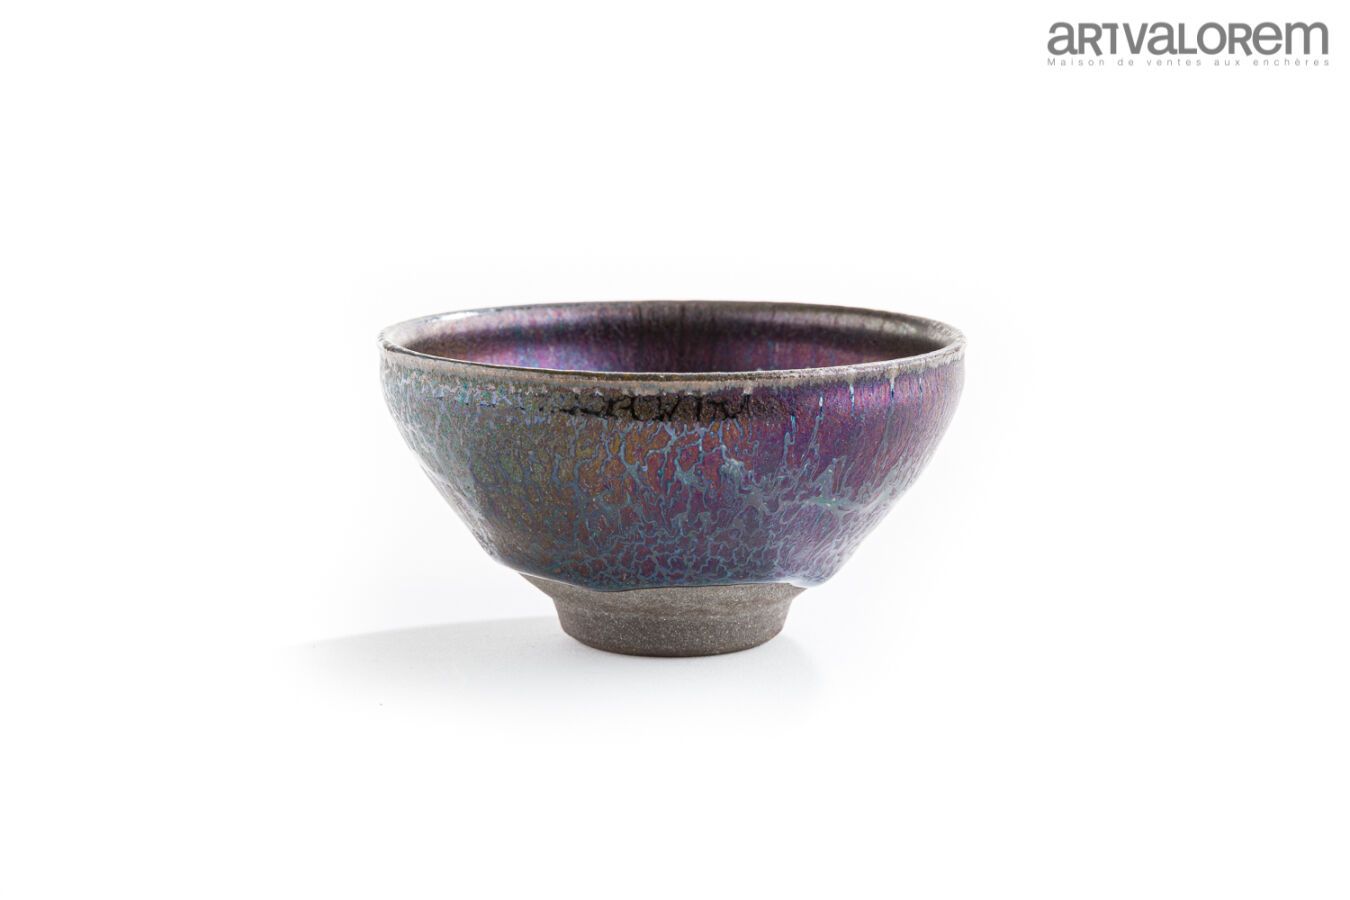 Null GIREL Jean (born 1947)
Partially glazed stoneware vase with eggplant irides&hellip;